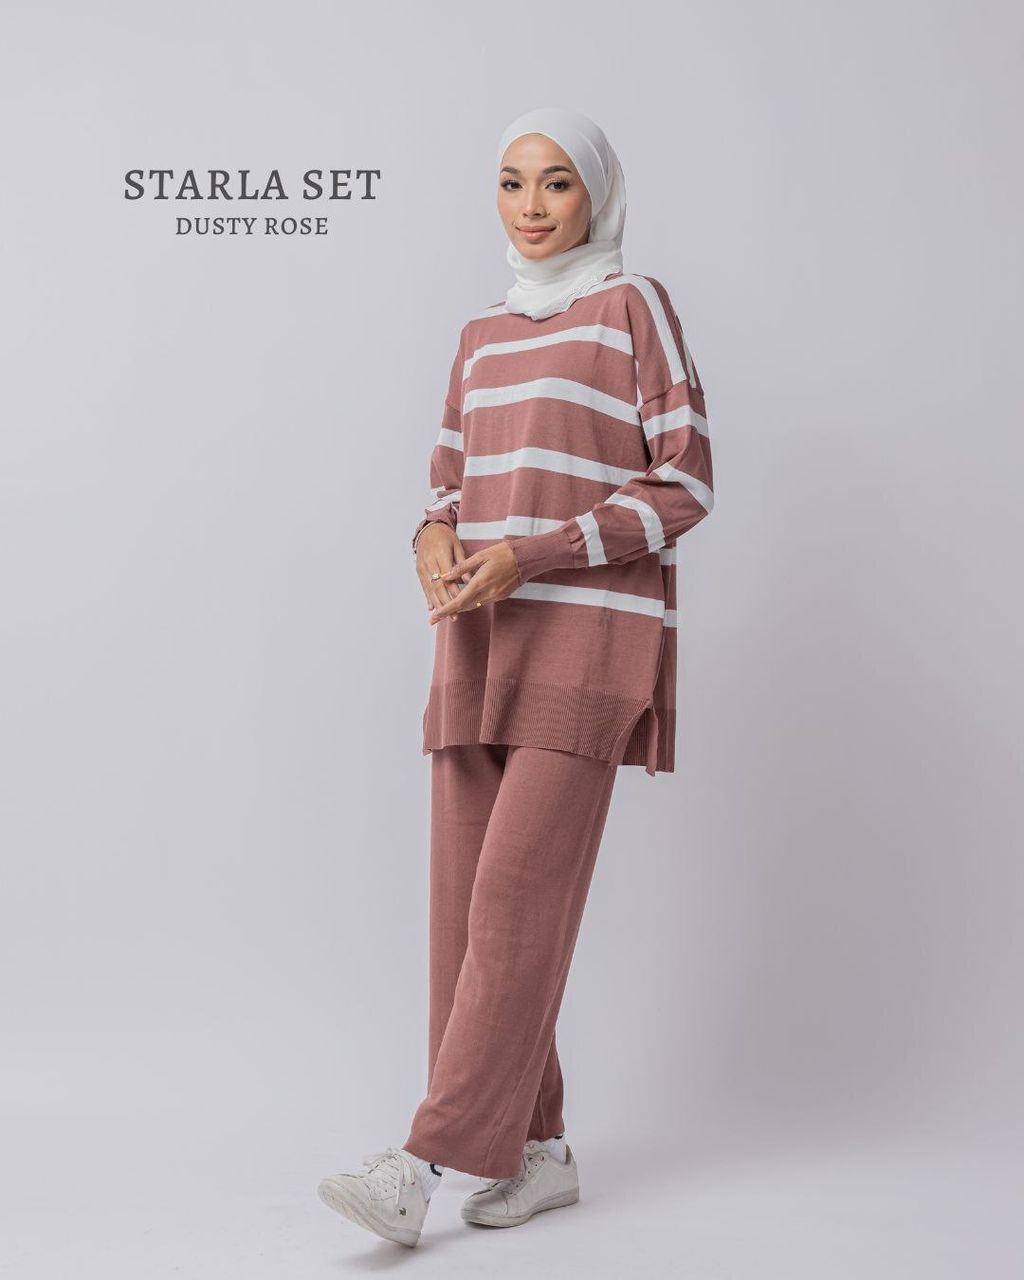 haura-wear-cotton-baju-muslimah-set-seluar-suit-muslimah-set-baju-dan-seluar-muslimah-palazzo (26)